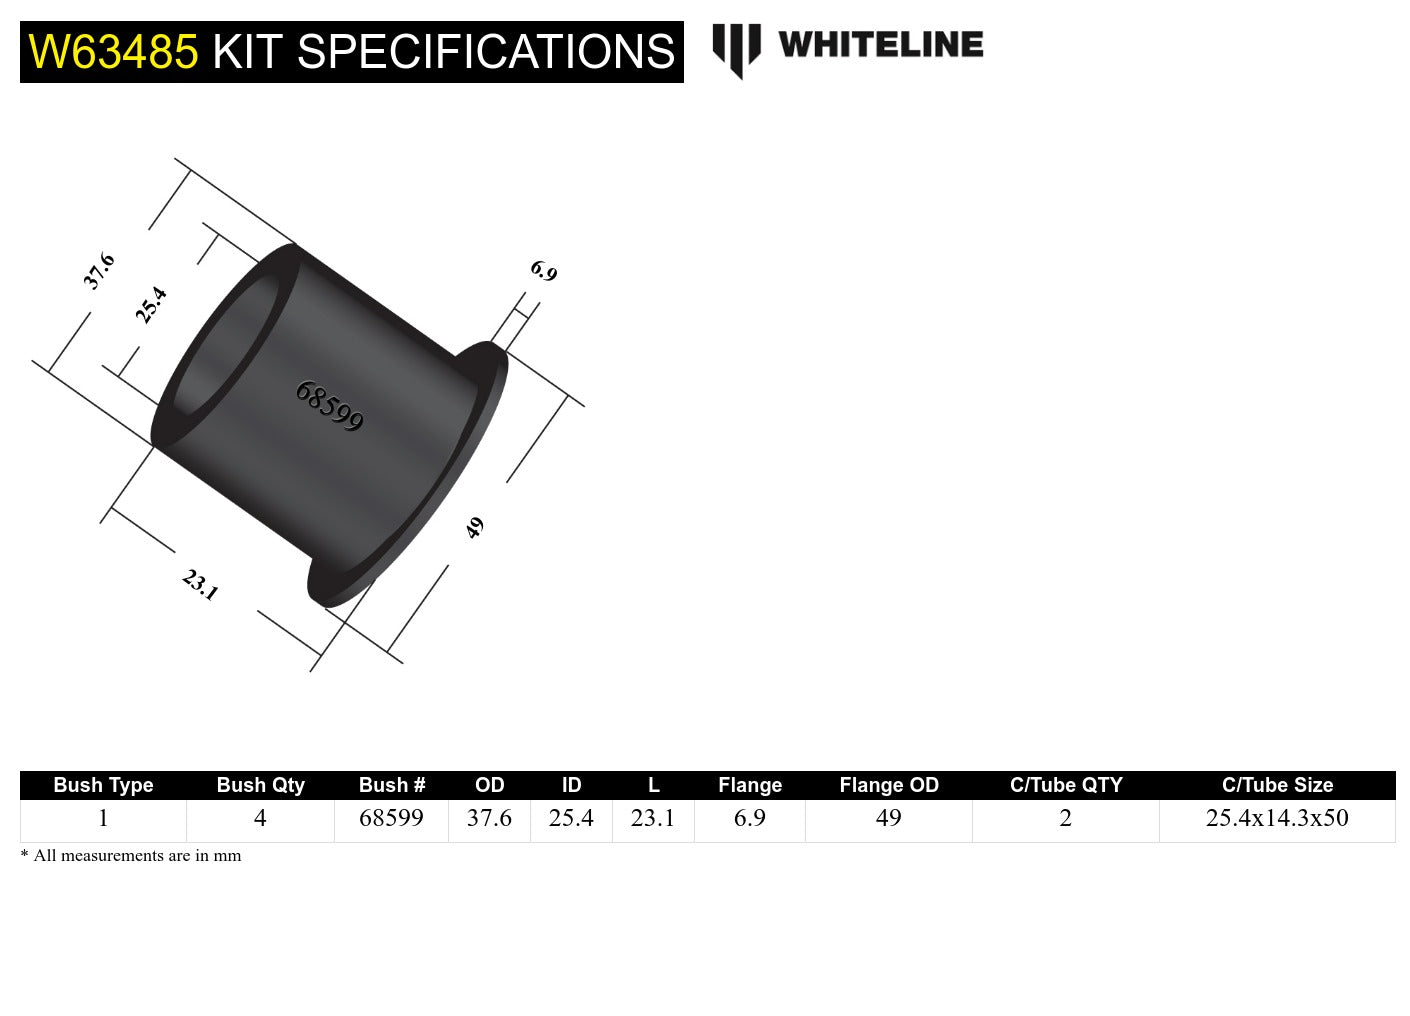 Rear Control Arm Upper - Bushing Kit to Suit Nissan Dualis, Juke, X-Trail and Renault Kangoo, Koleos (W63485)